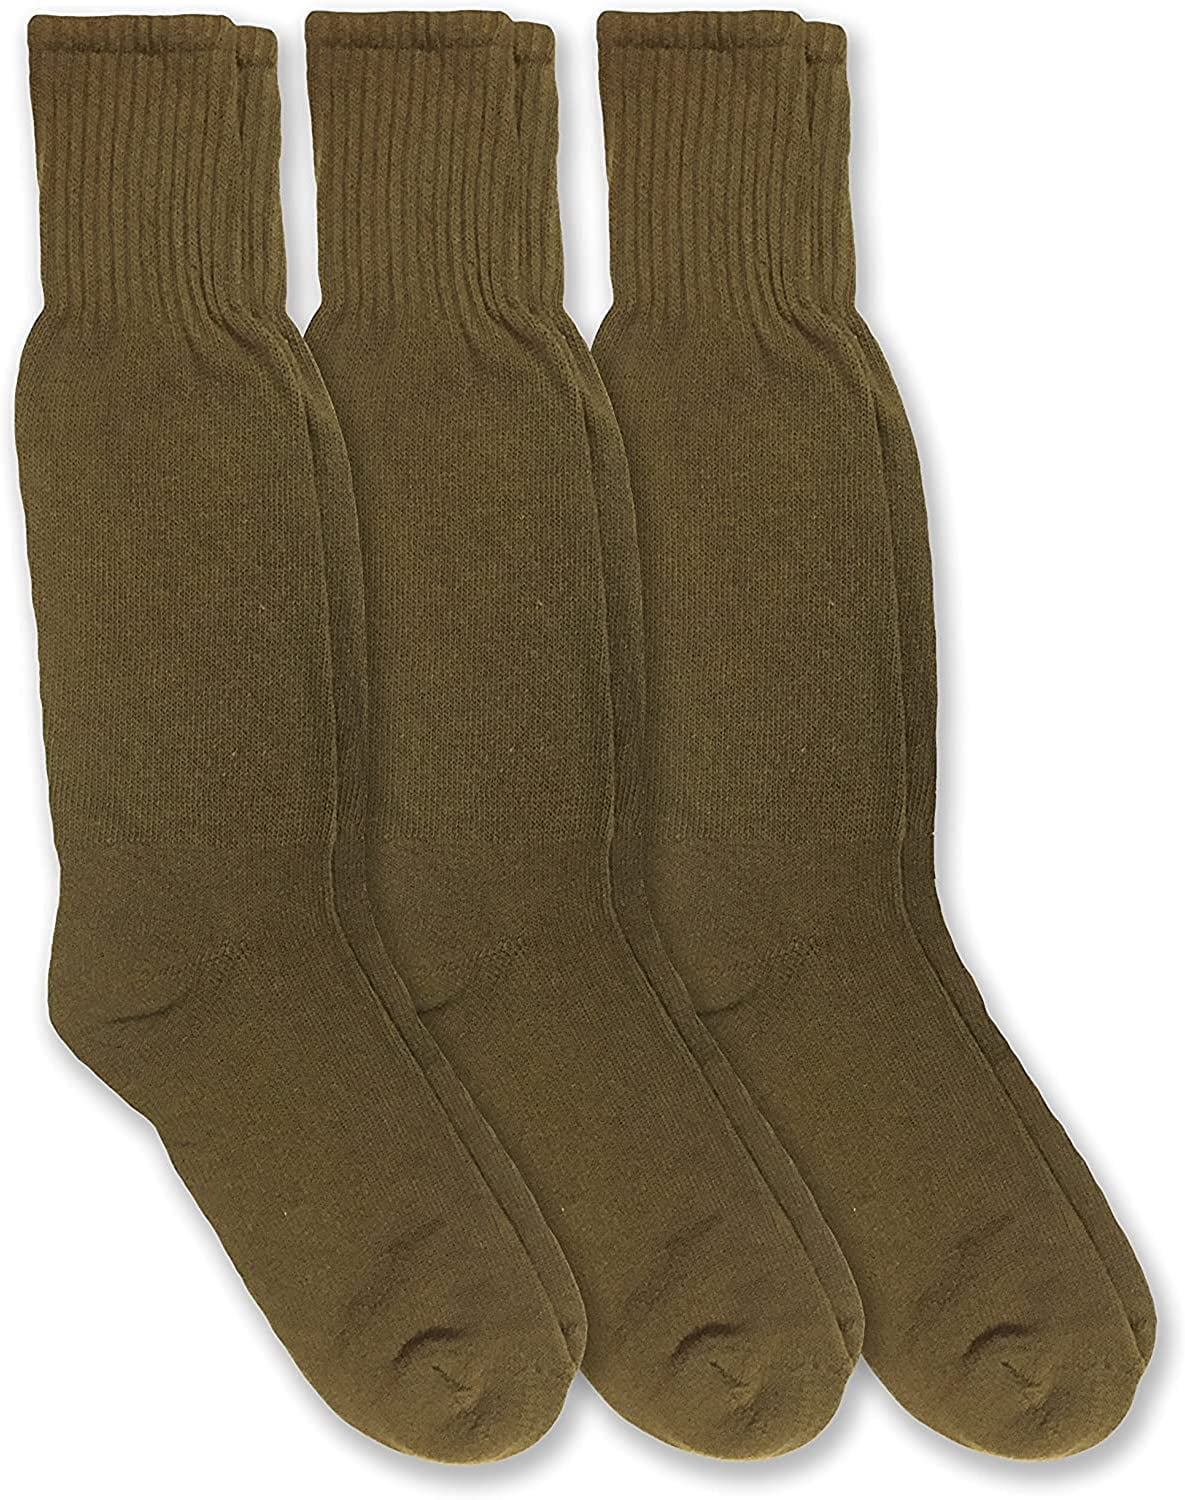 3 Pk Mens No Show Socks Non Slip Foot Cover Invisible Boat Liner Footies  10-13 